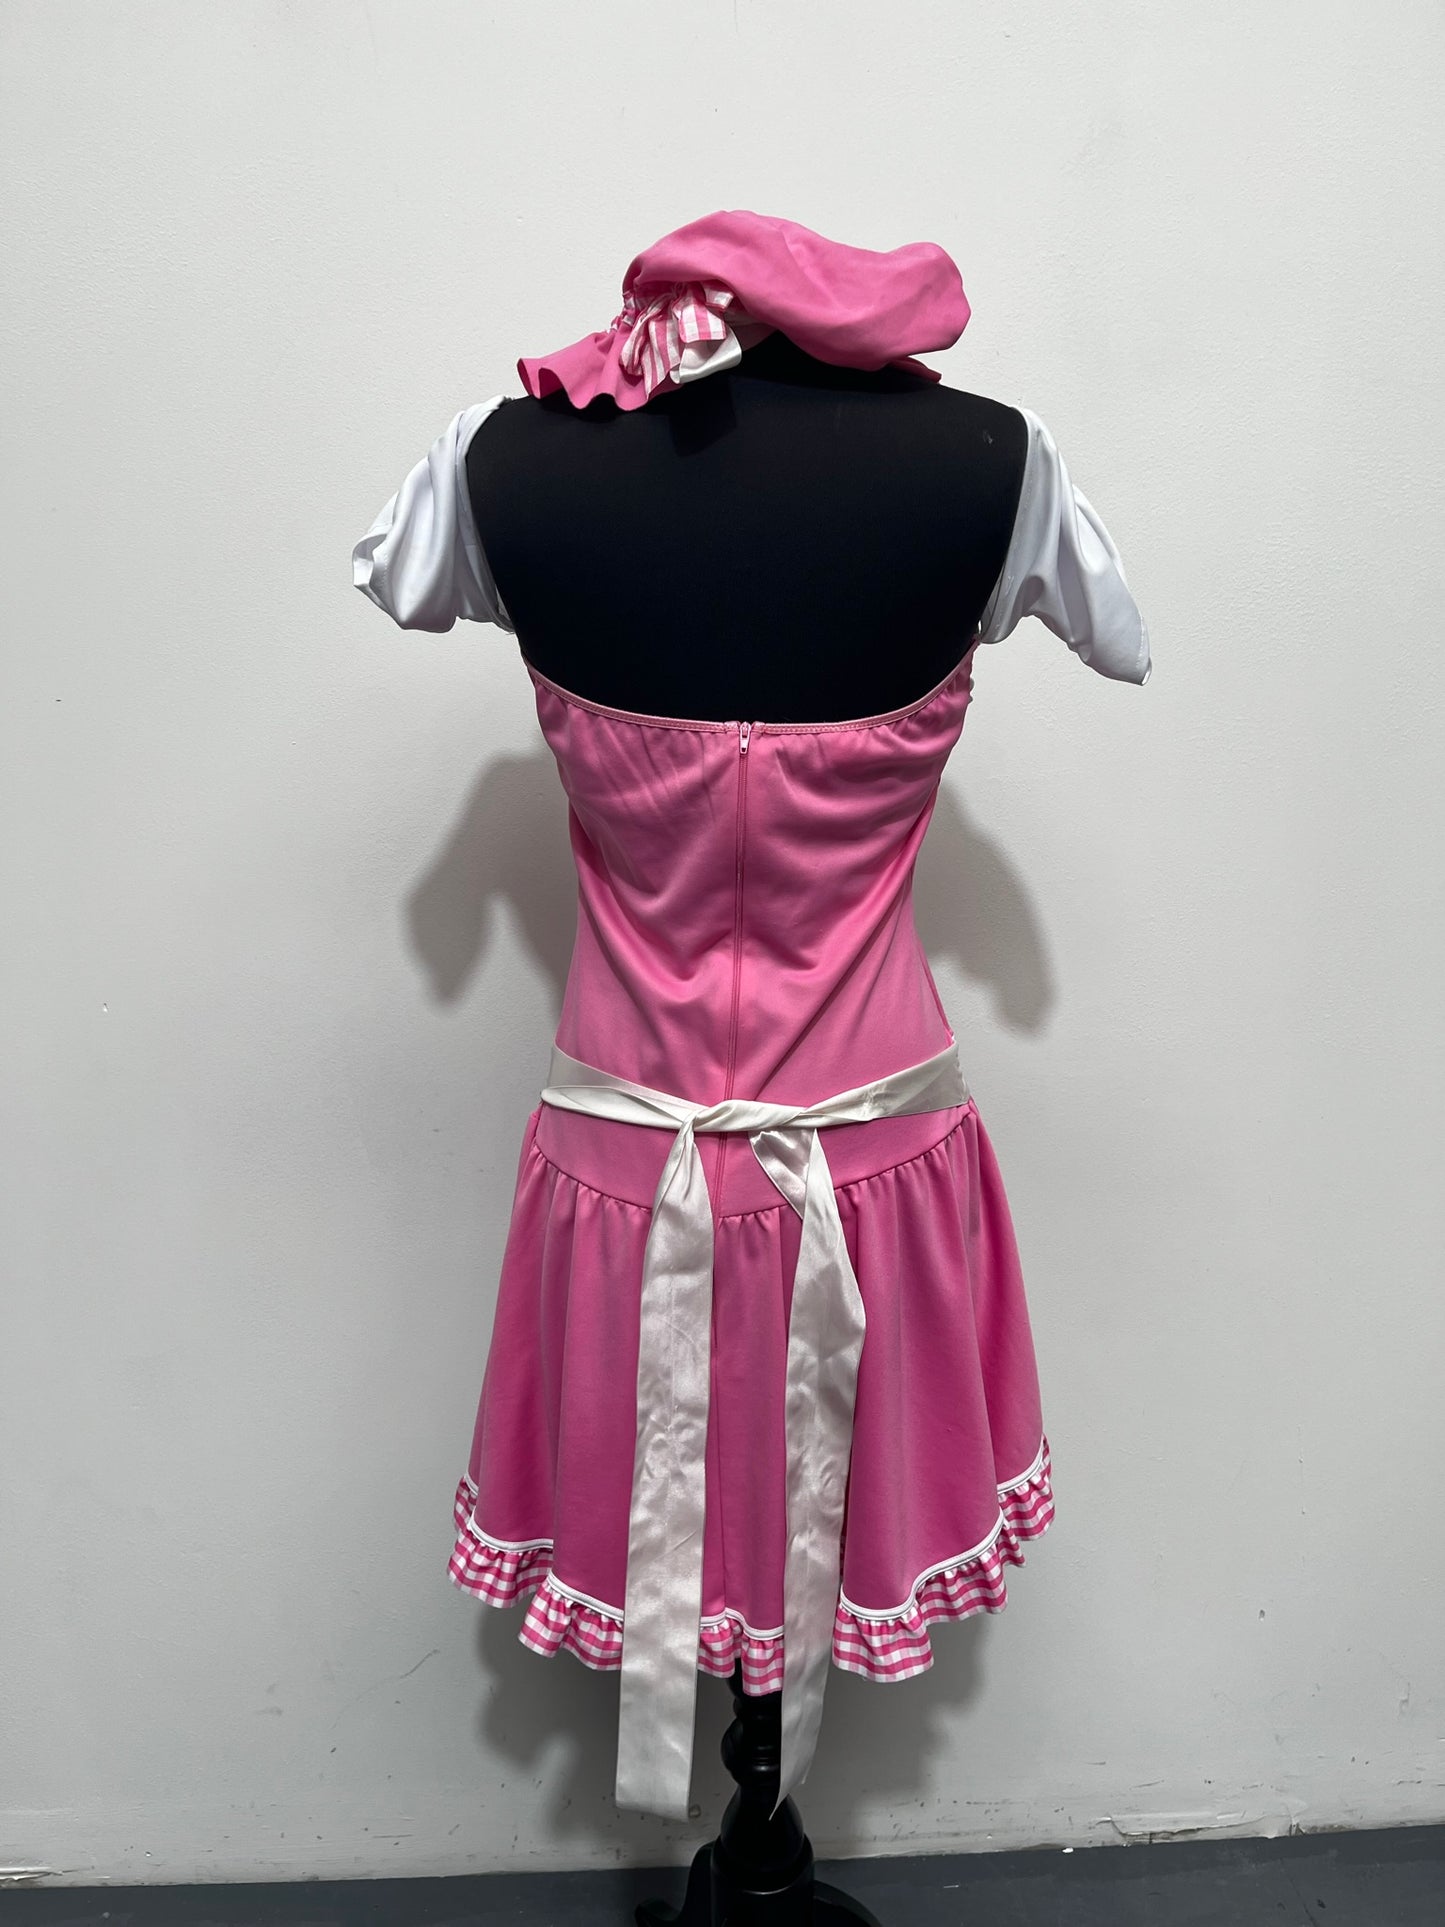 Pink Little Miss Muffet Dress Size M/L - Ex hire